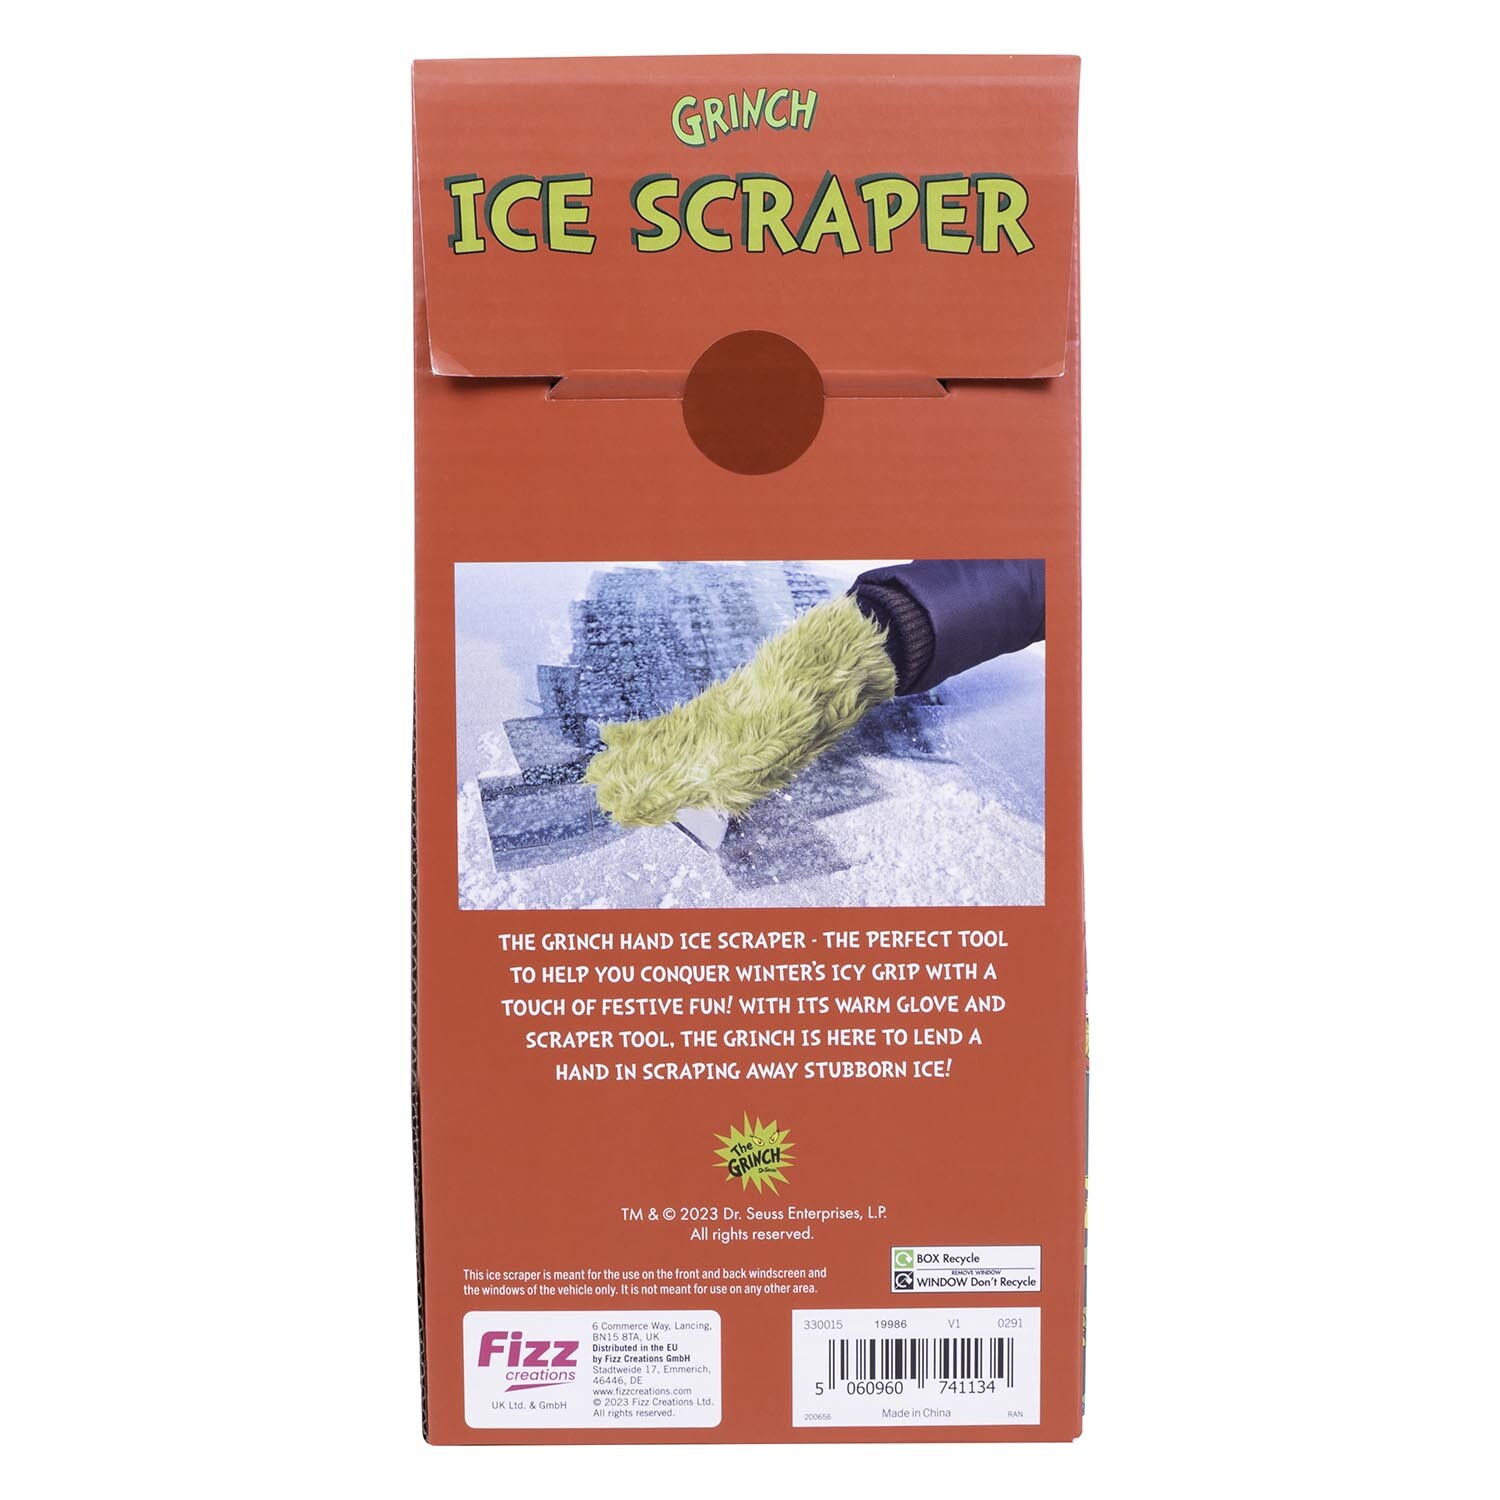 The Grinch Green Ice Scraper Image 3